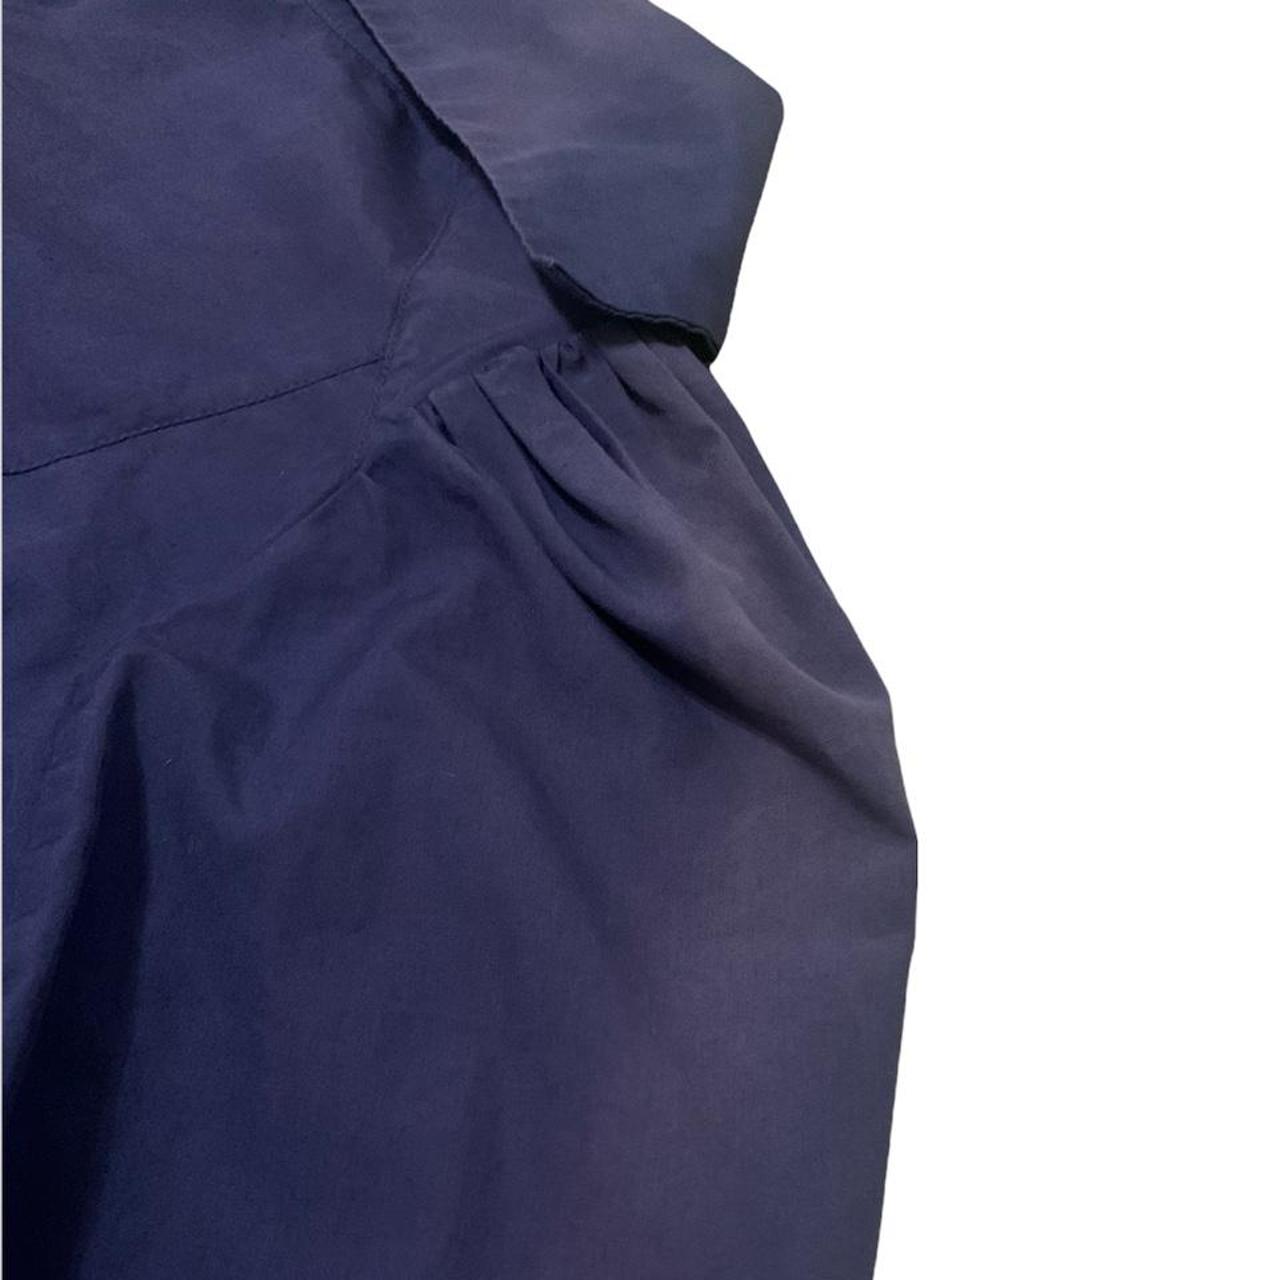 Product Image 3 - Vivienne Westwood Navy Blue Blazer

Size